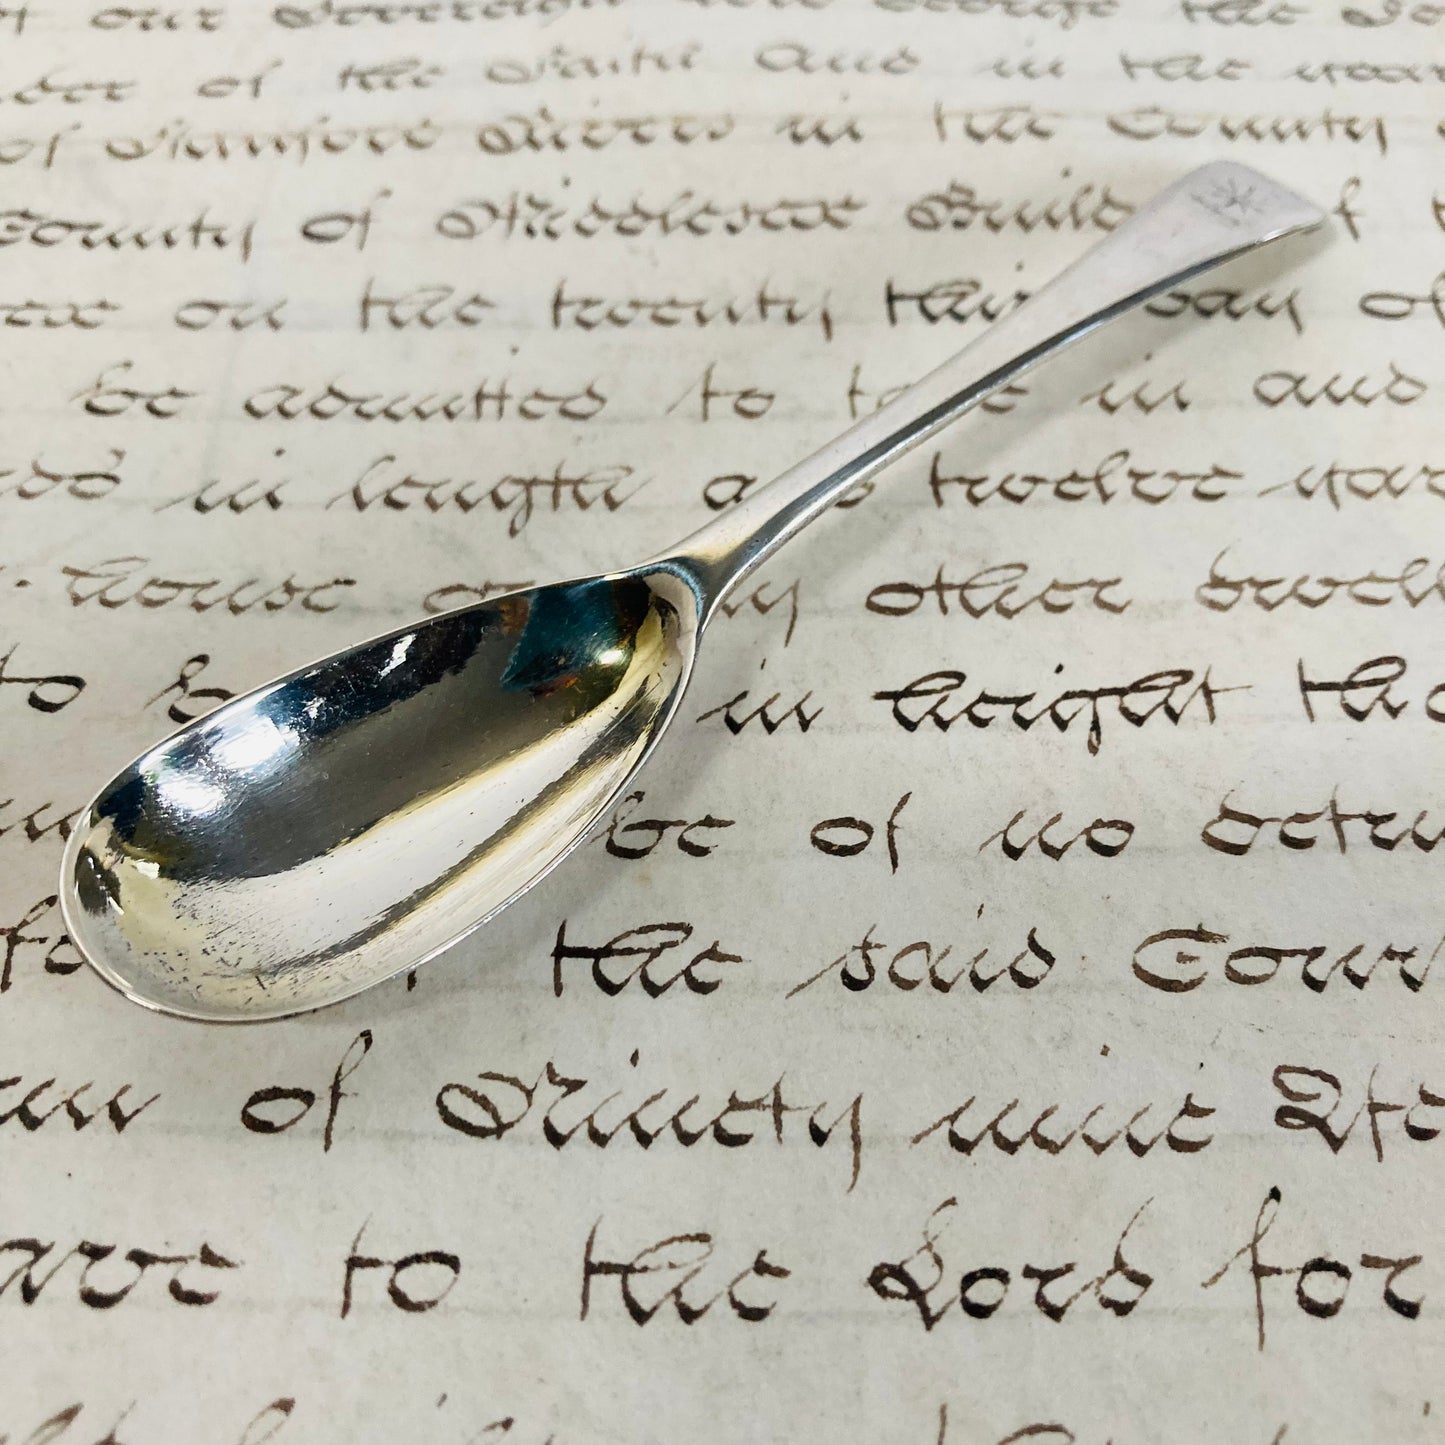 Antique Silver Egg Spoon London 1806